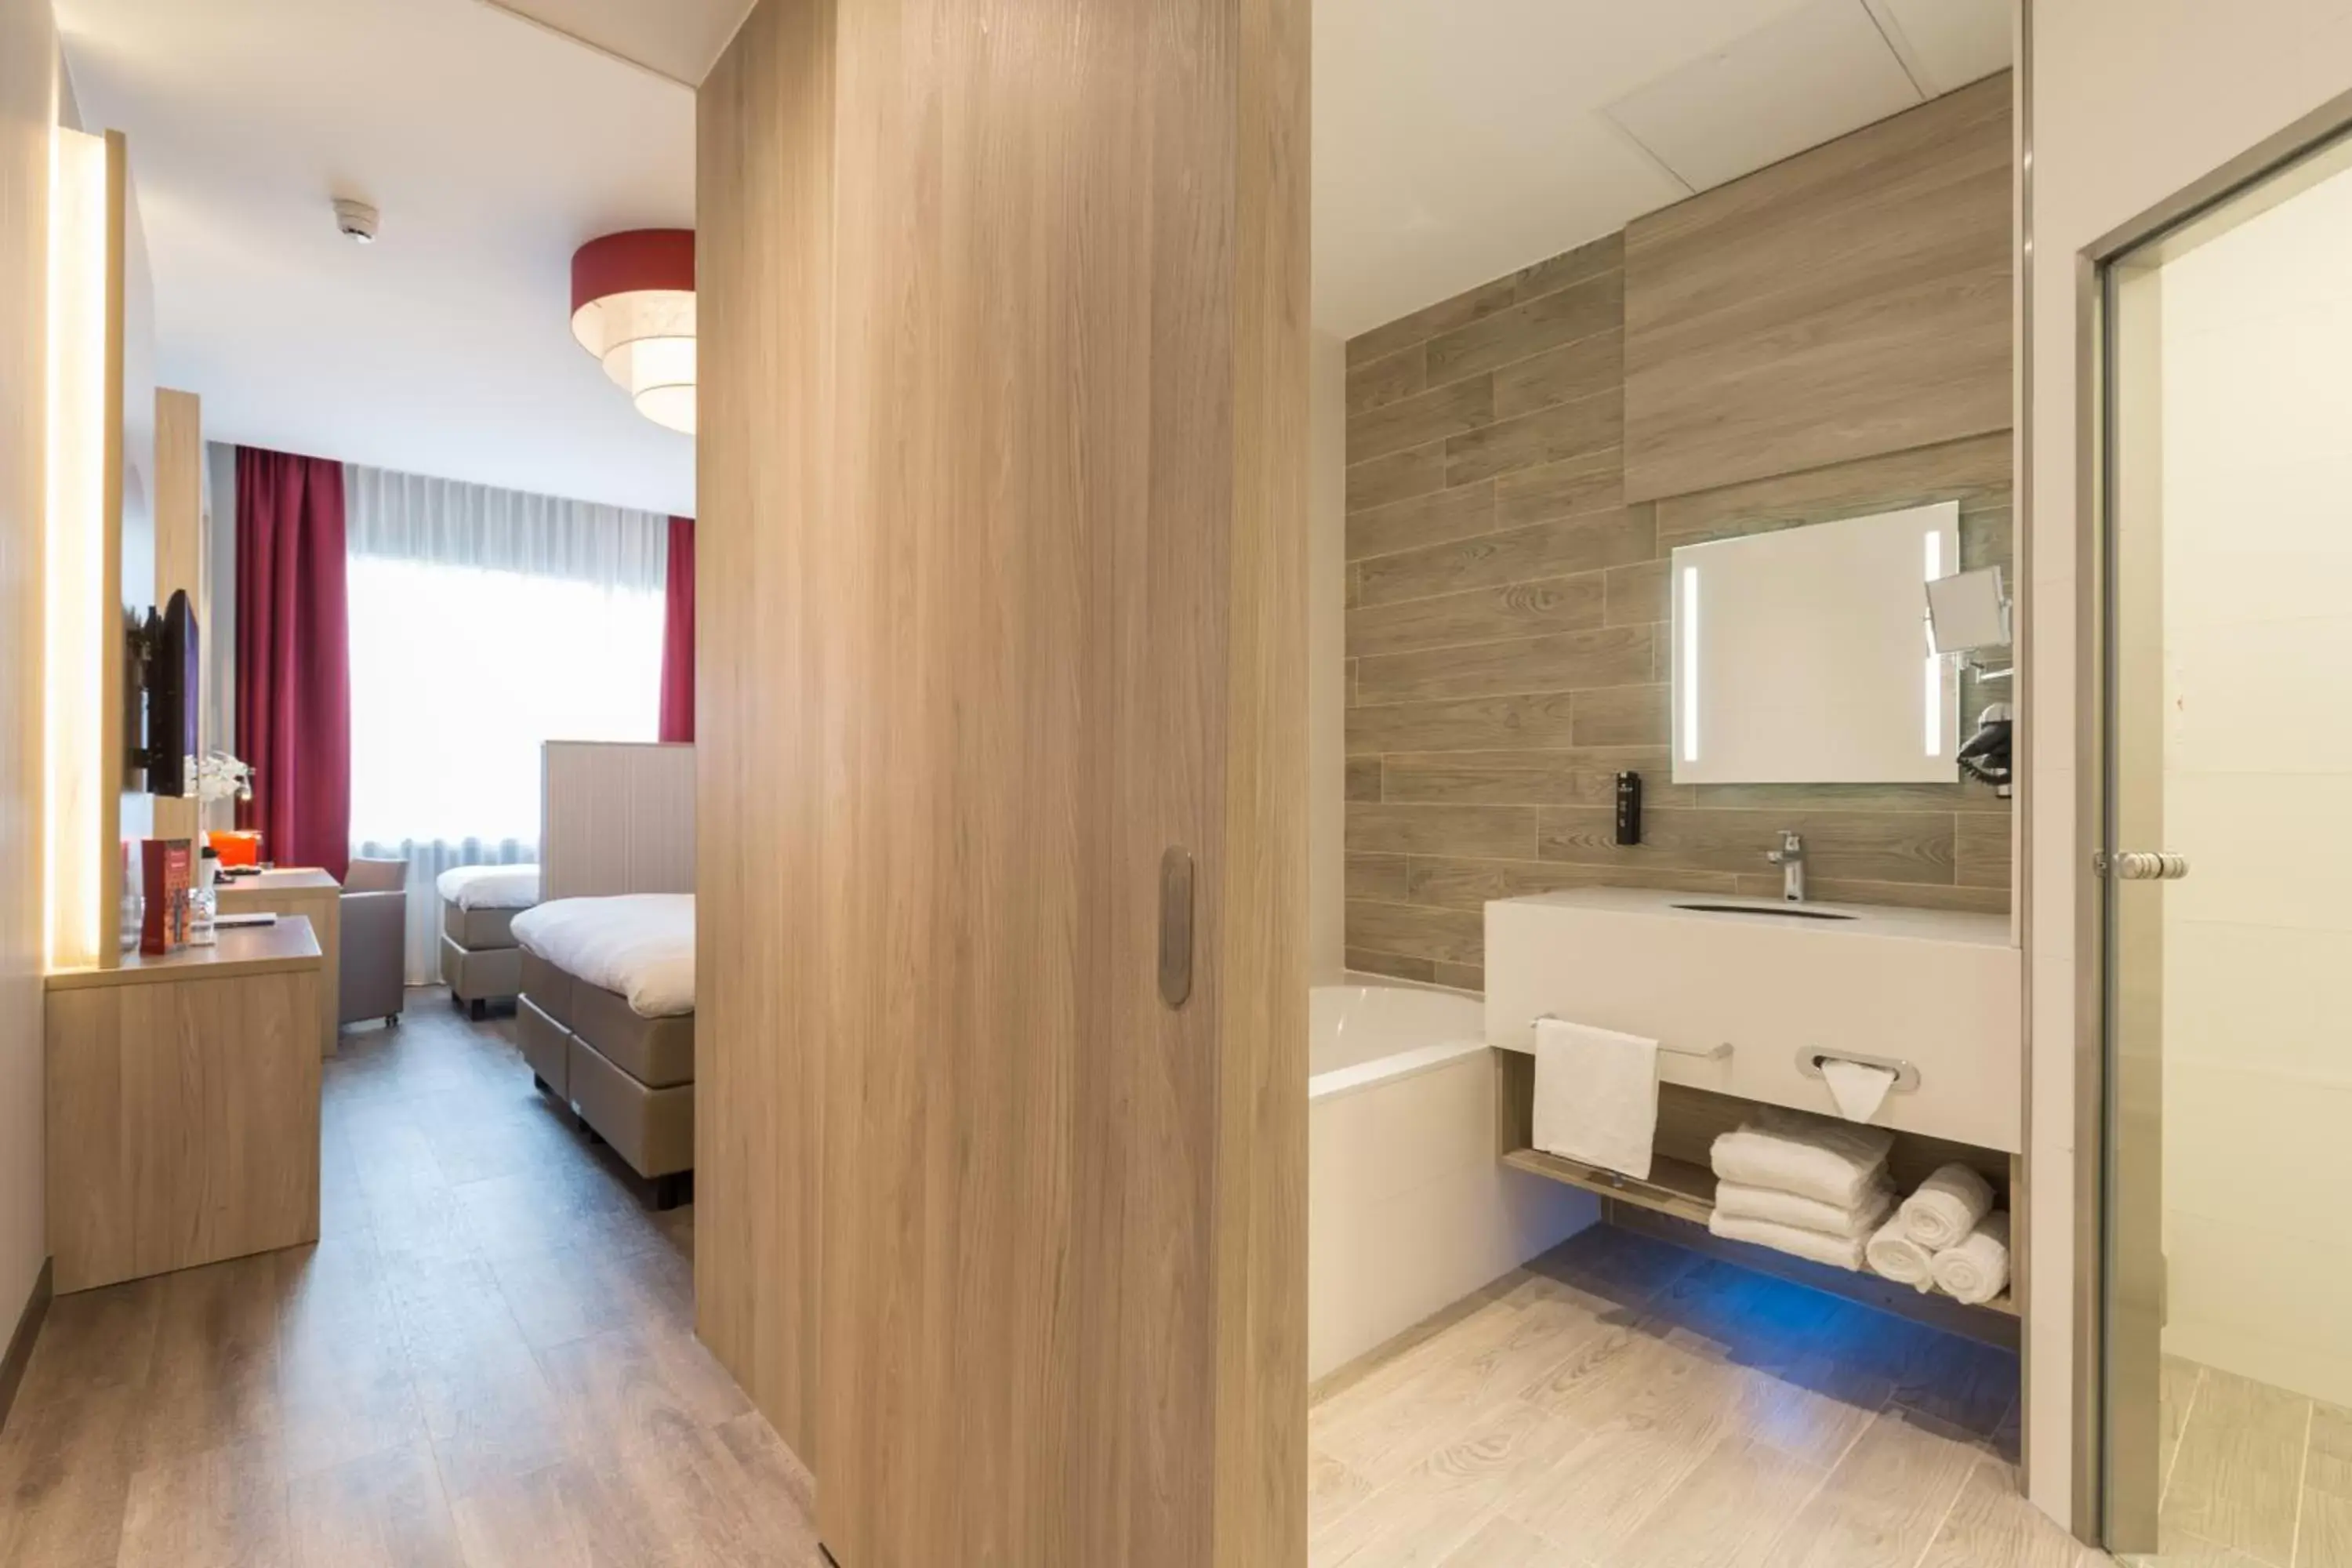 Photo of the whole room, Bathroom in Ramada The Hague Scheveningen